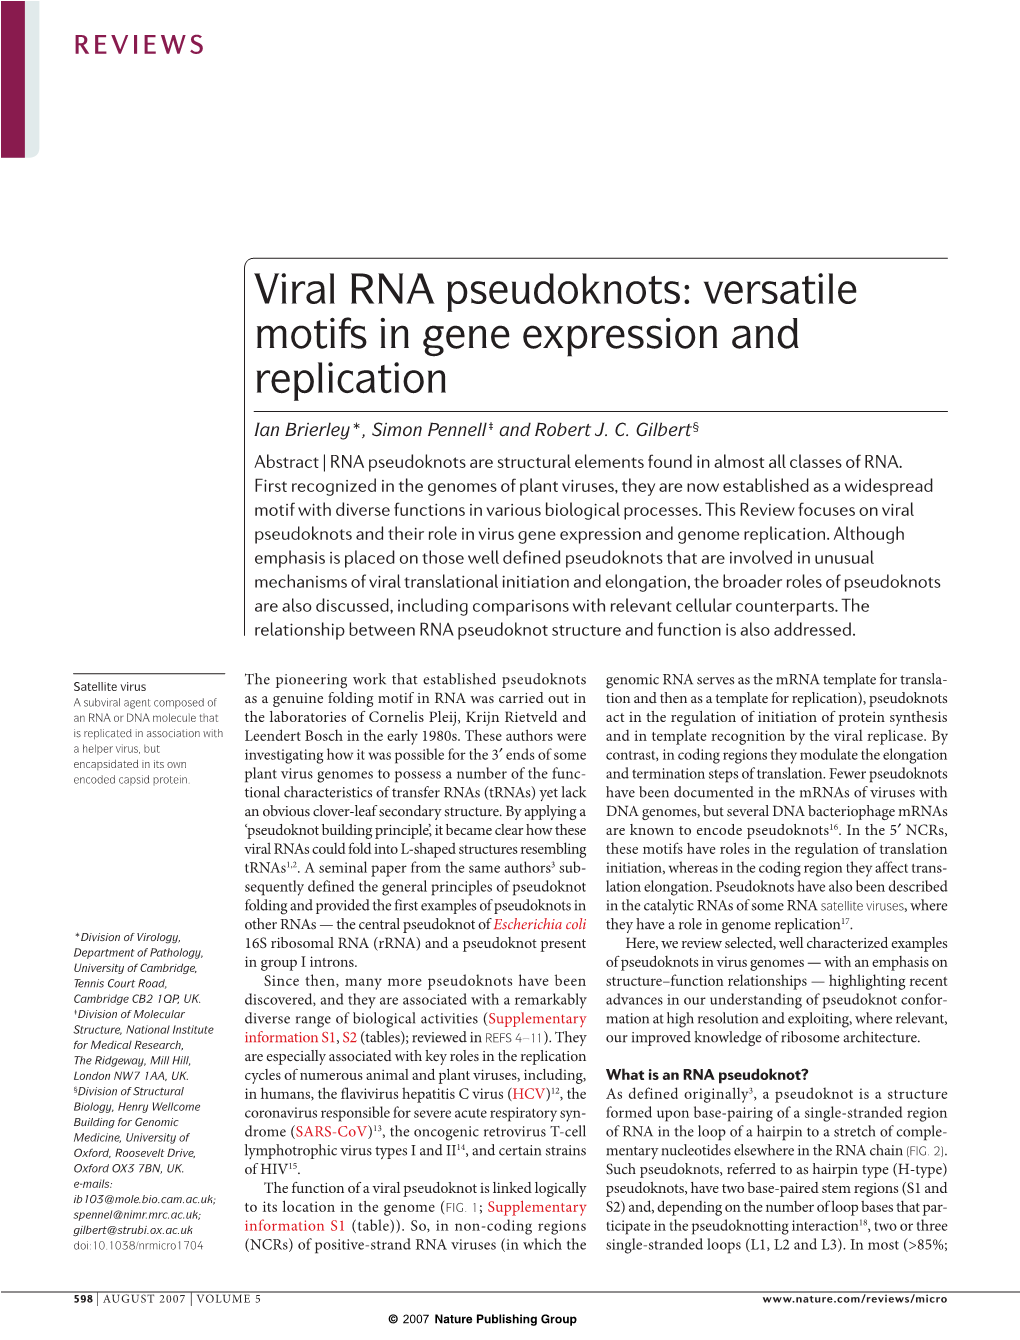 Viral RNA Pseudoknots: Versatile Motifs in Gene Expression and Replication